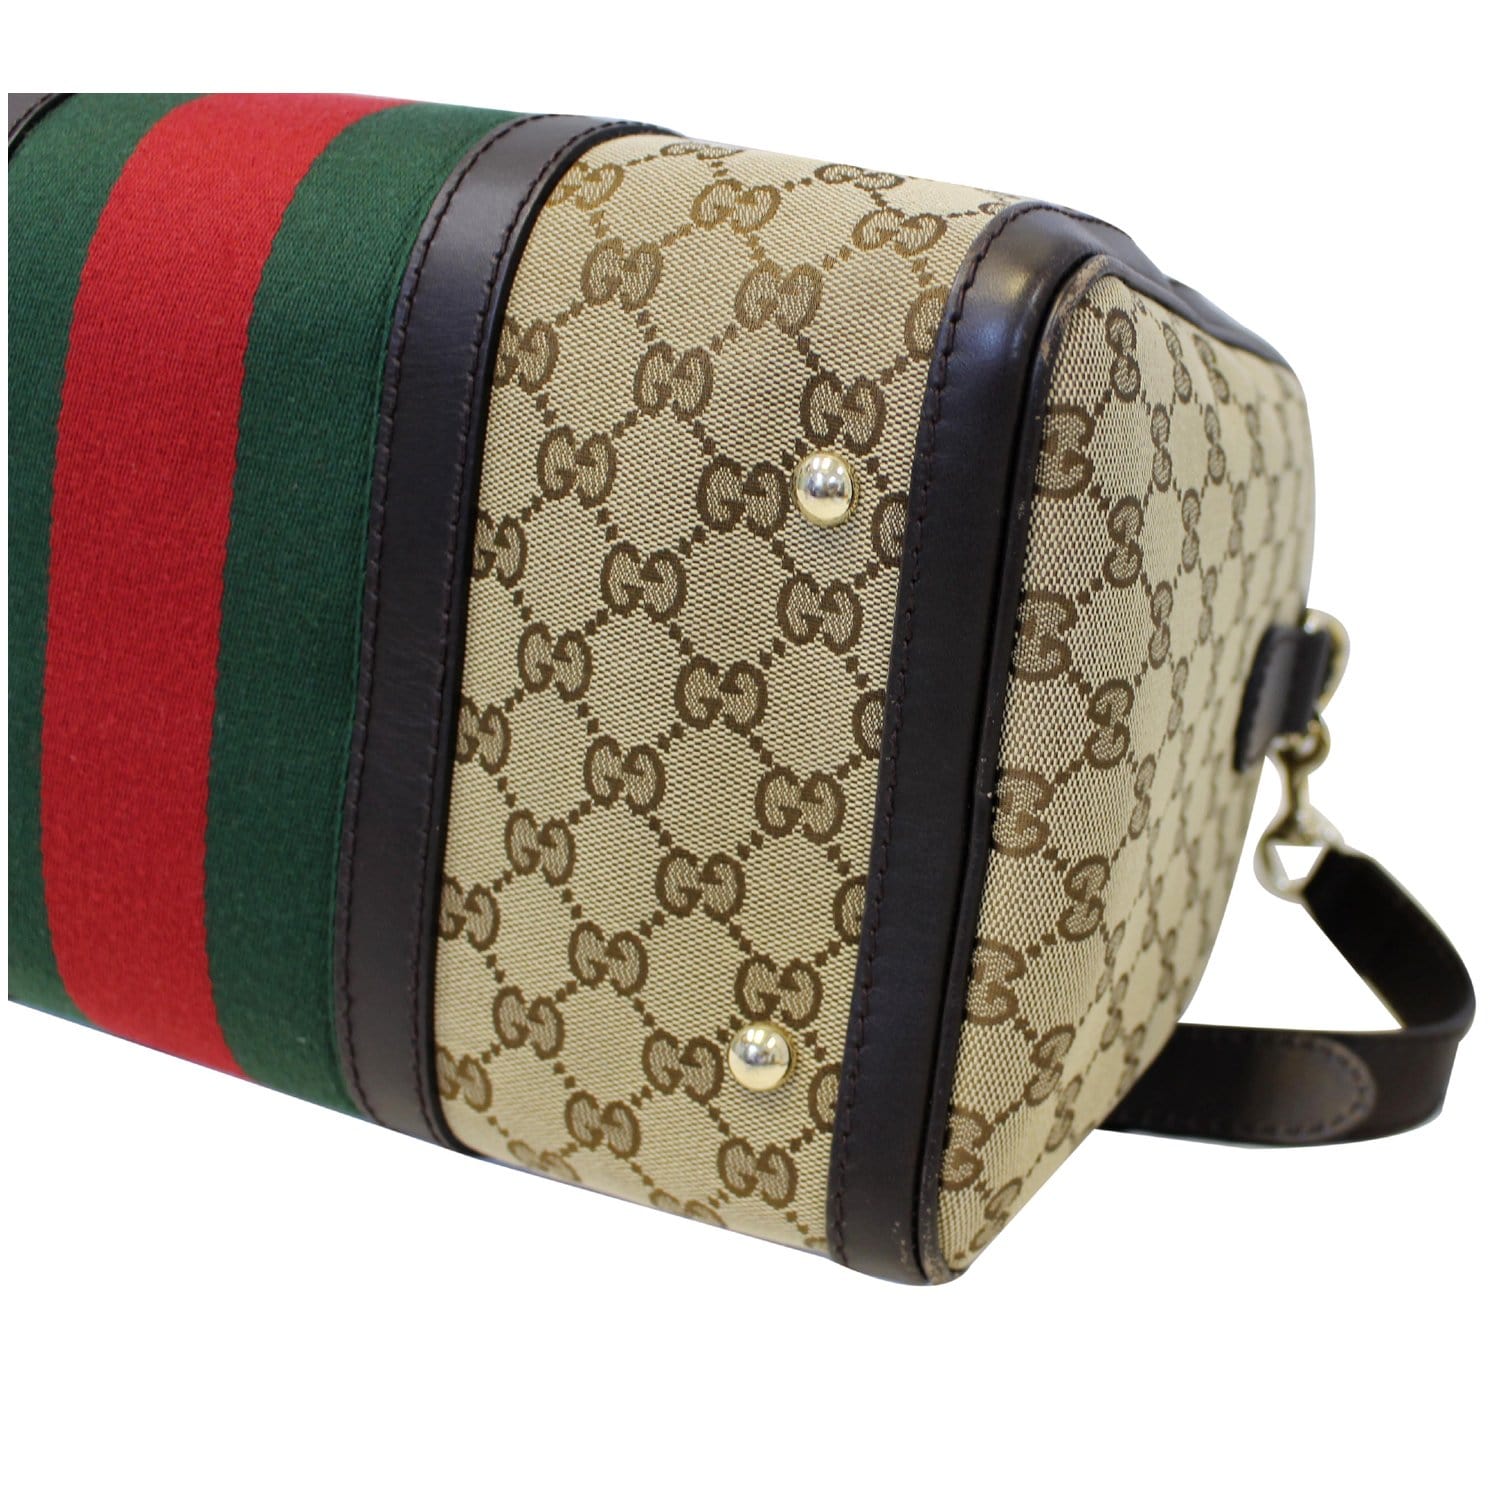 Vintage Gucci Boston bag. Vintage Gucci never dissapoints. #guccibag #